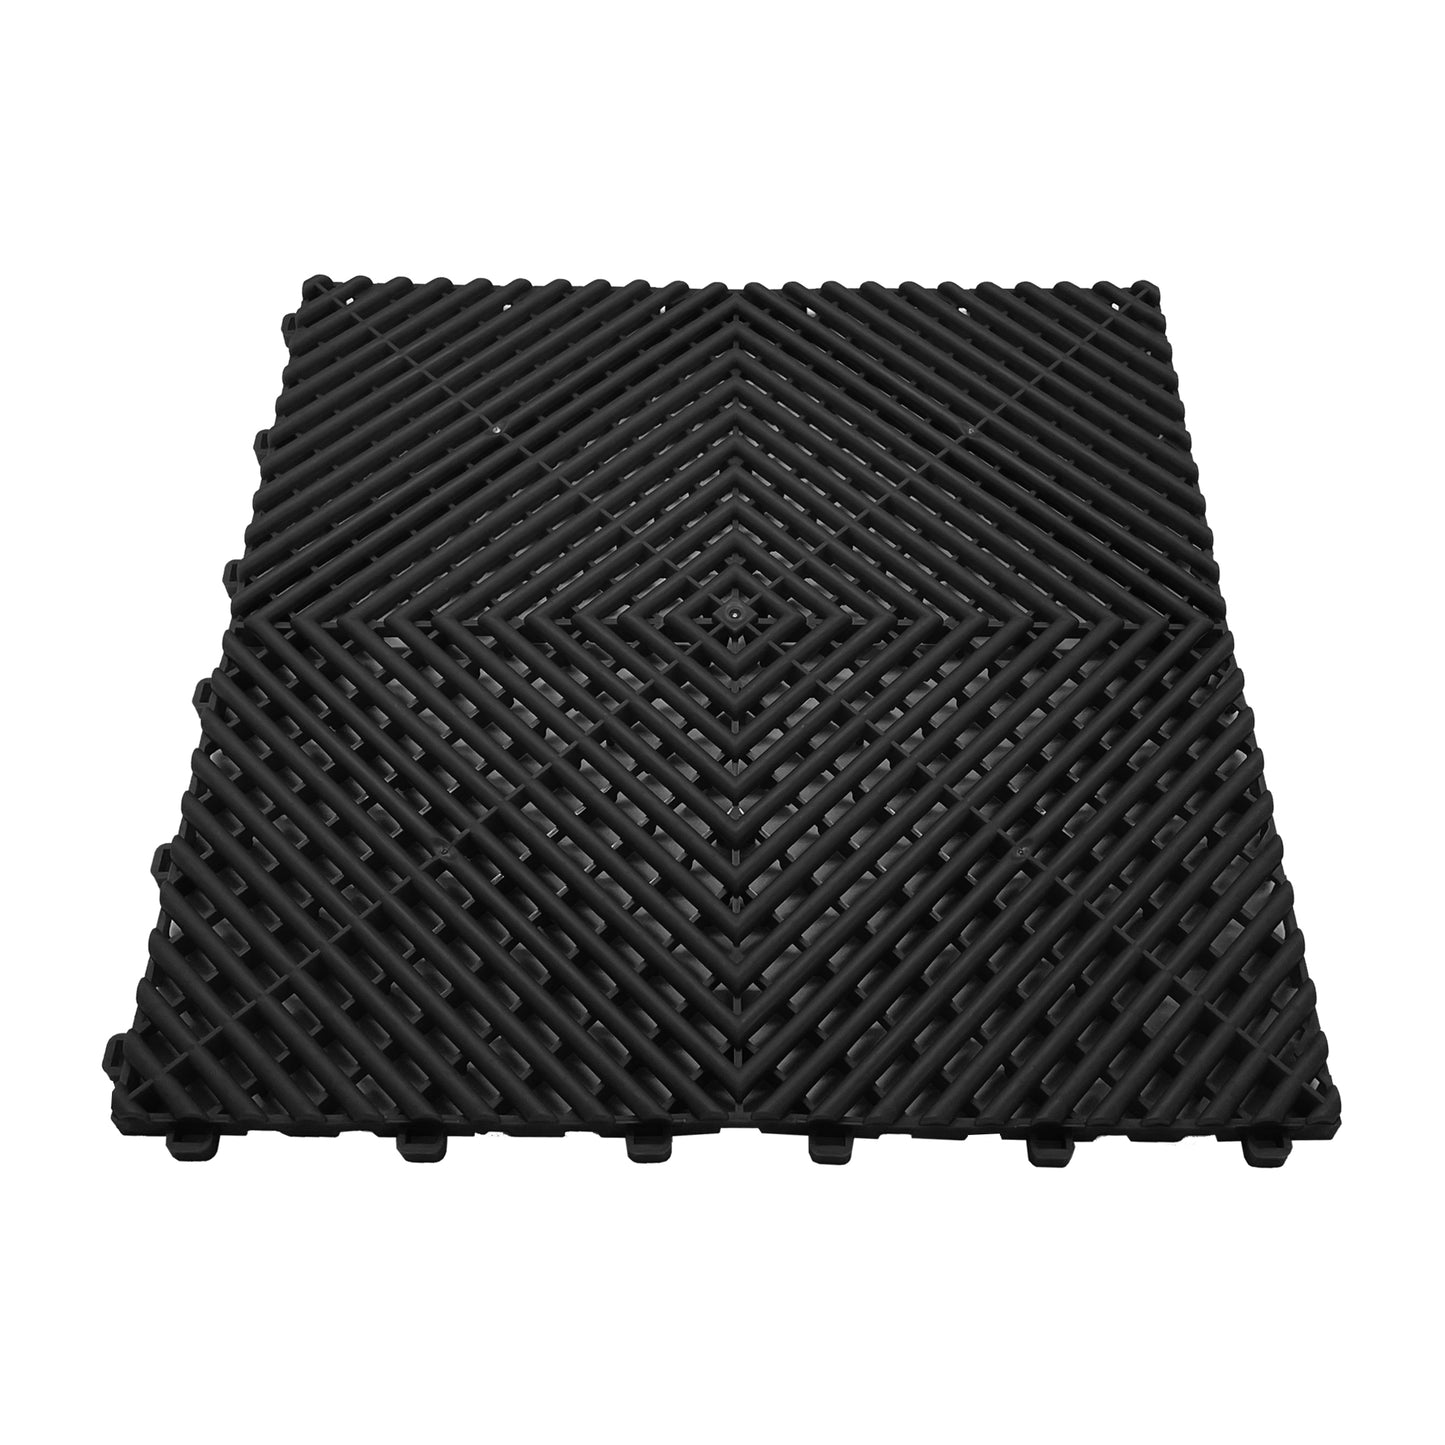 Nicoman Garage Floor Tile ribbed tiles